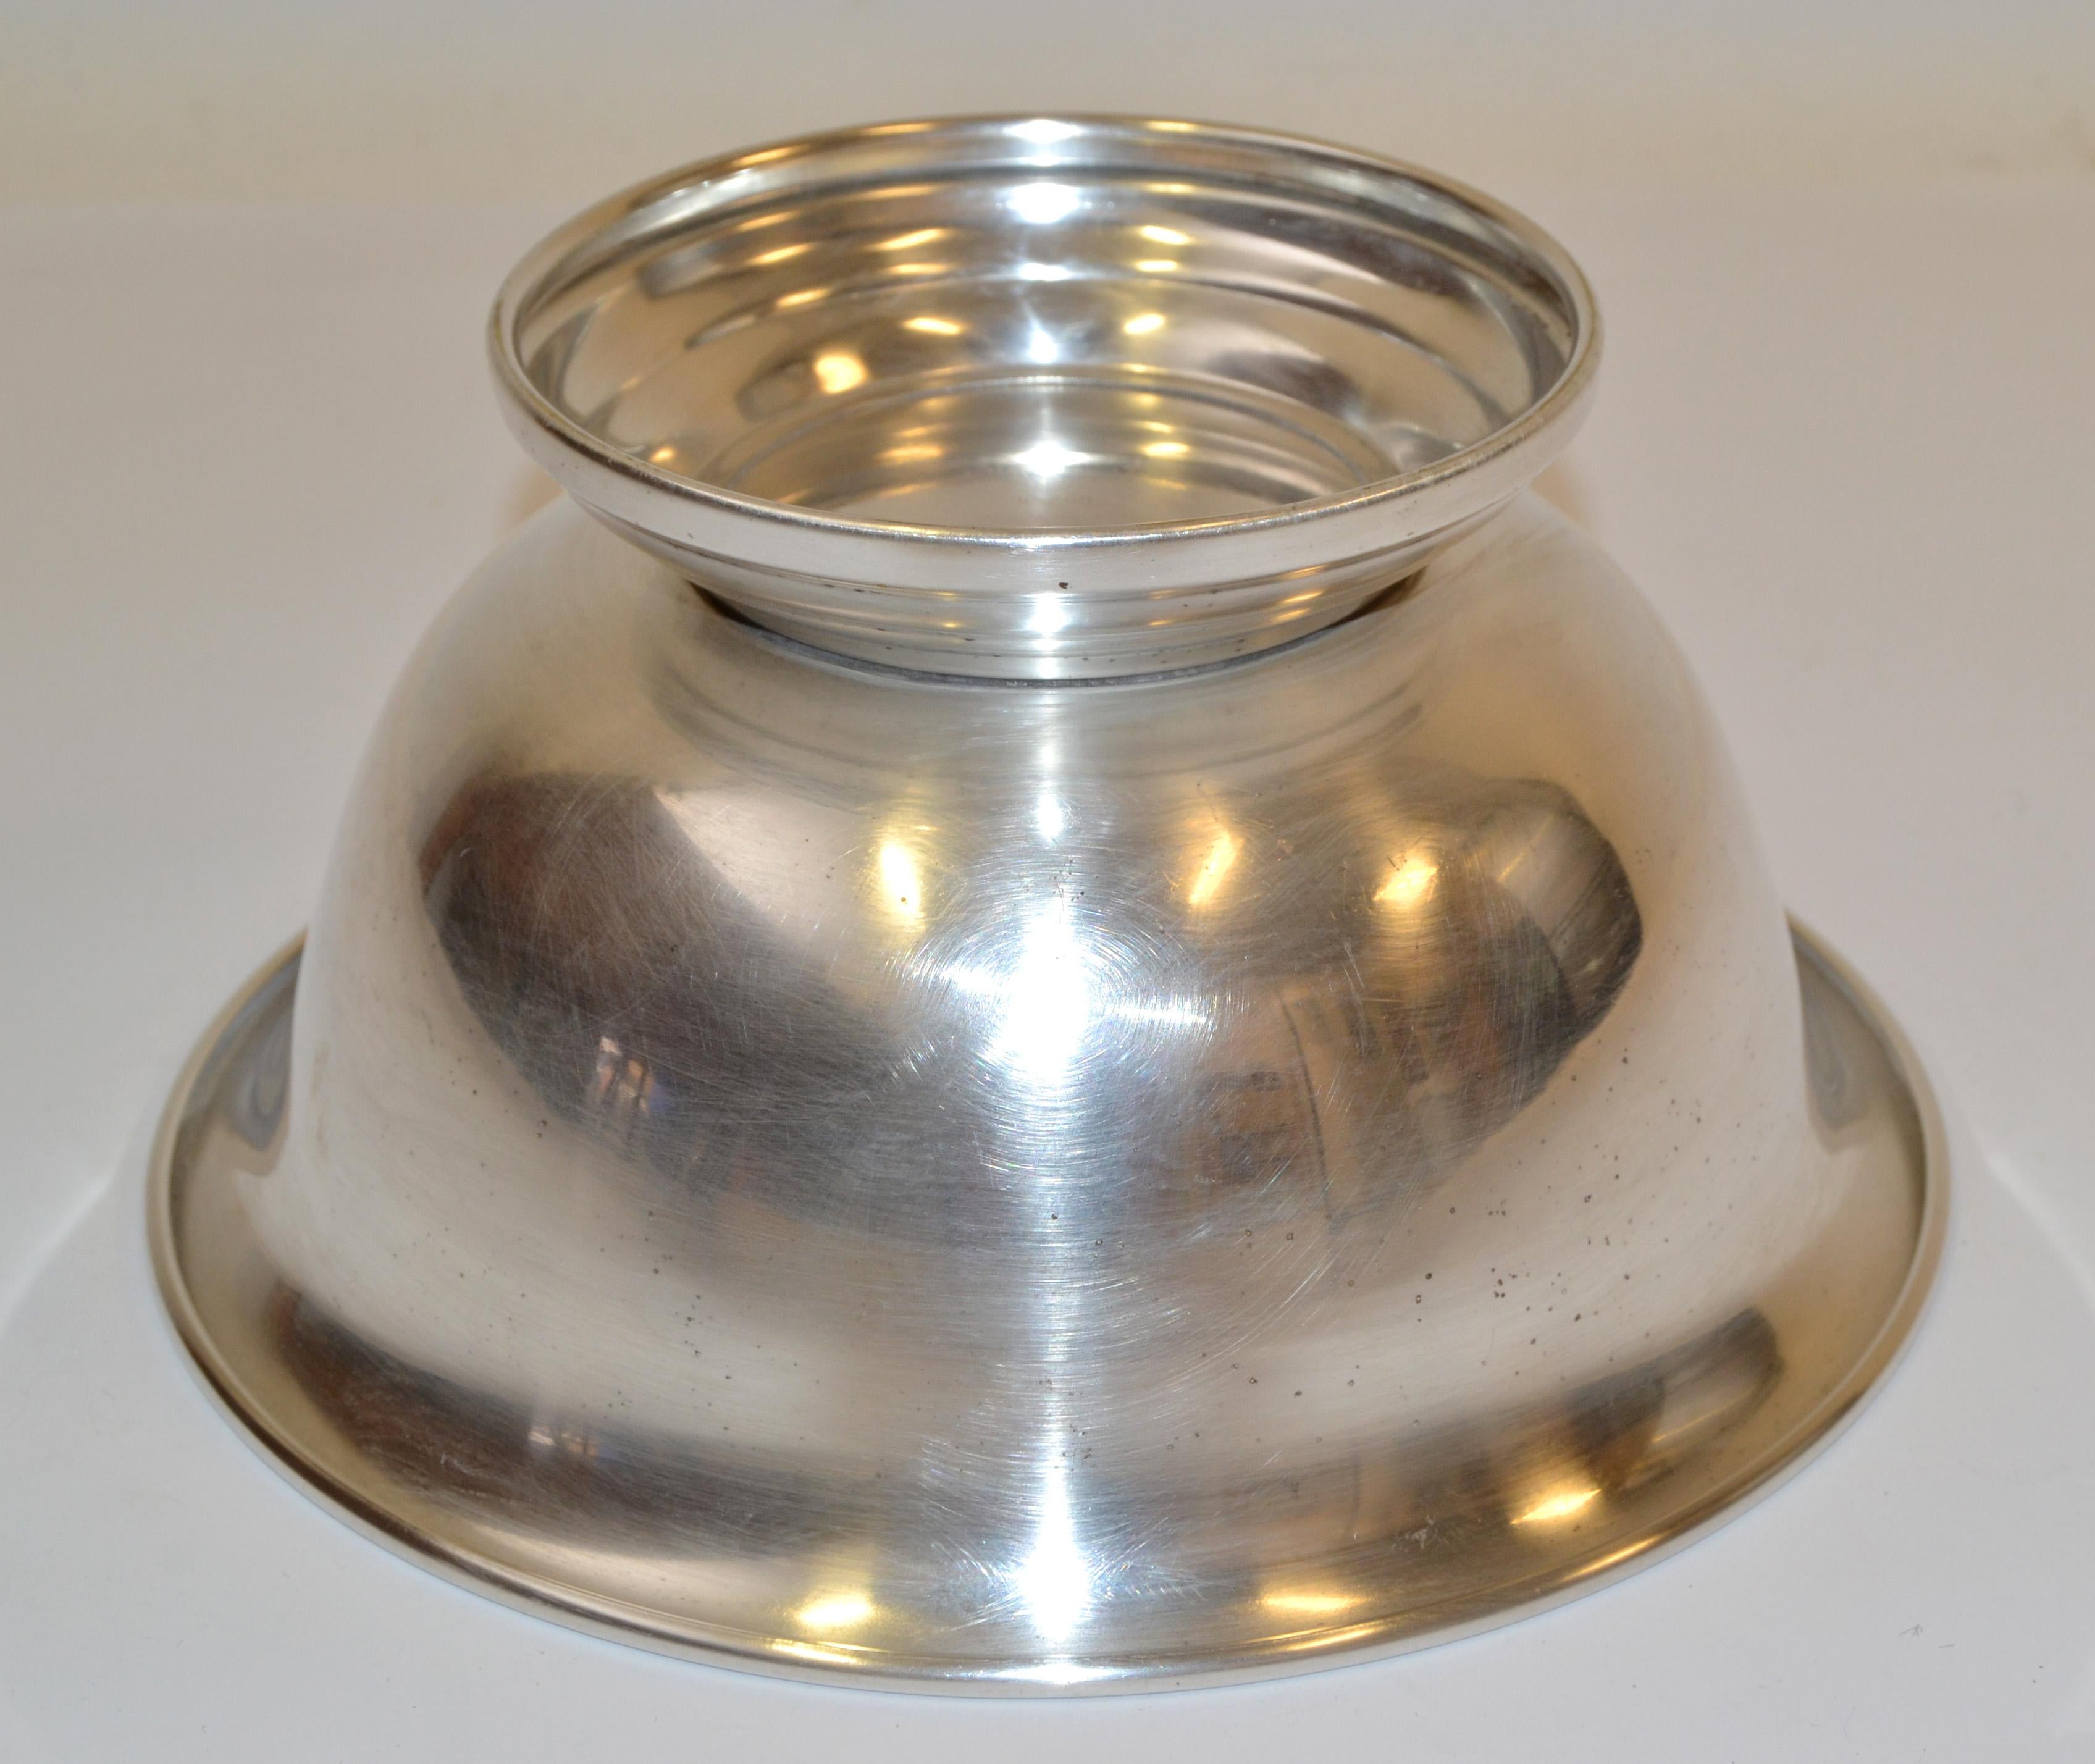 paul revere silver bowl